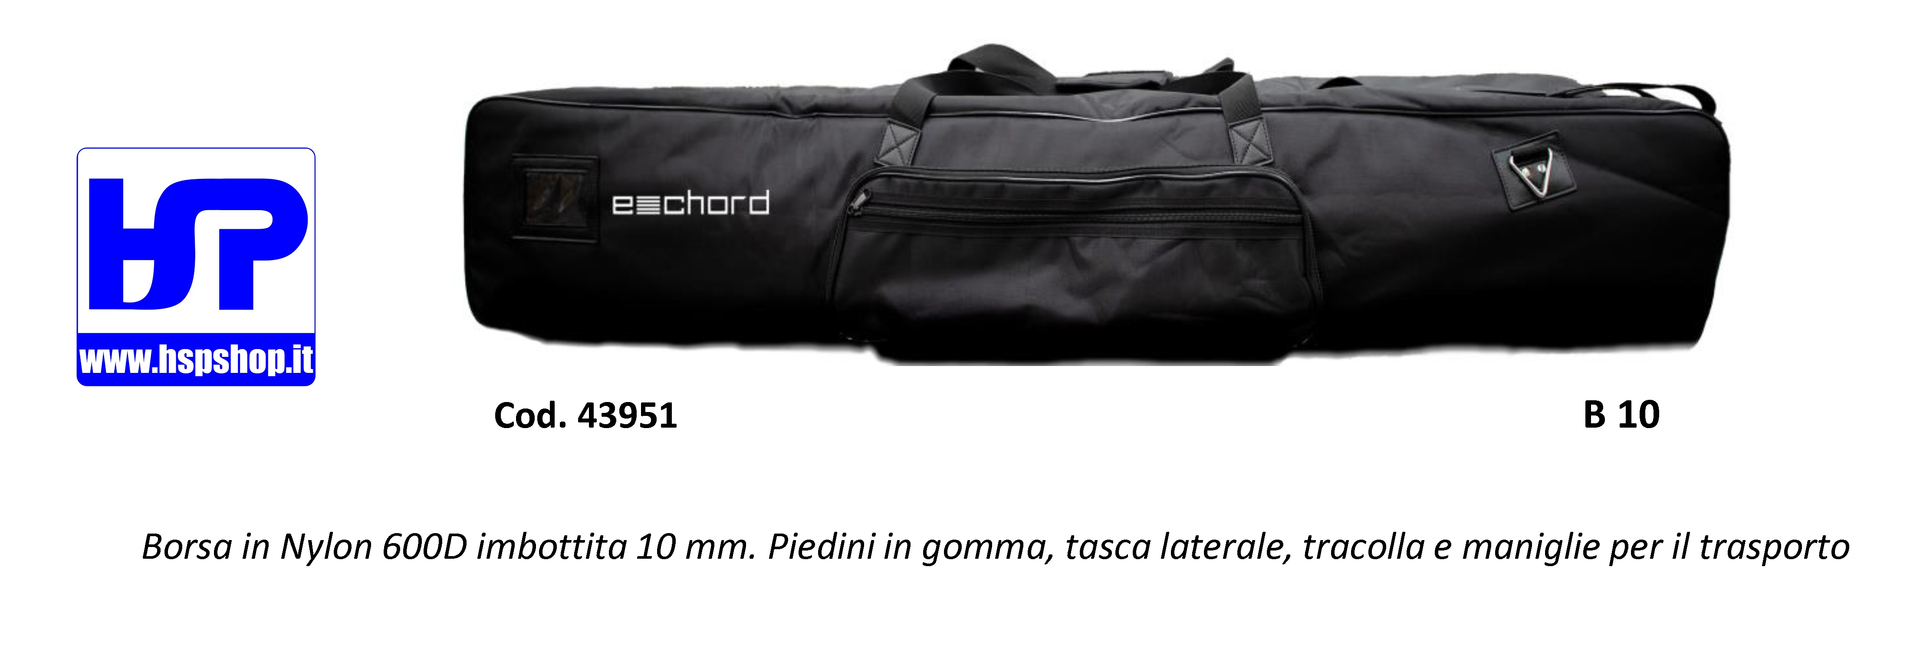 ECHORD - B10 - PADDED BAG FOR SP10